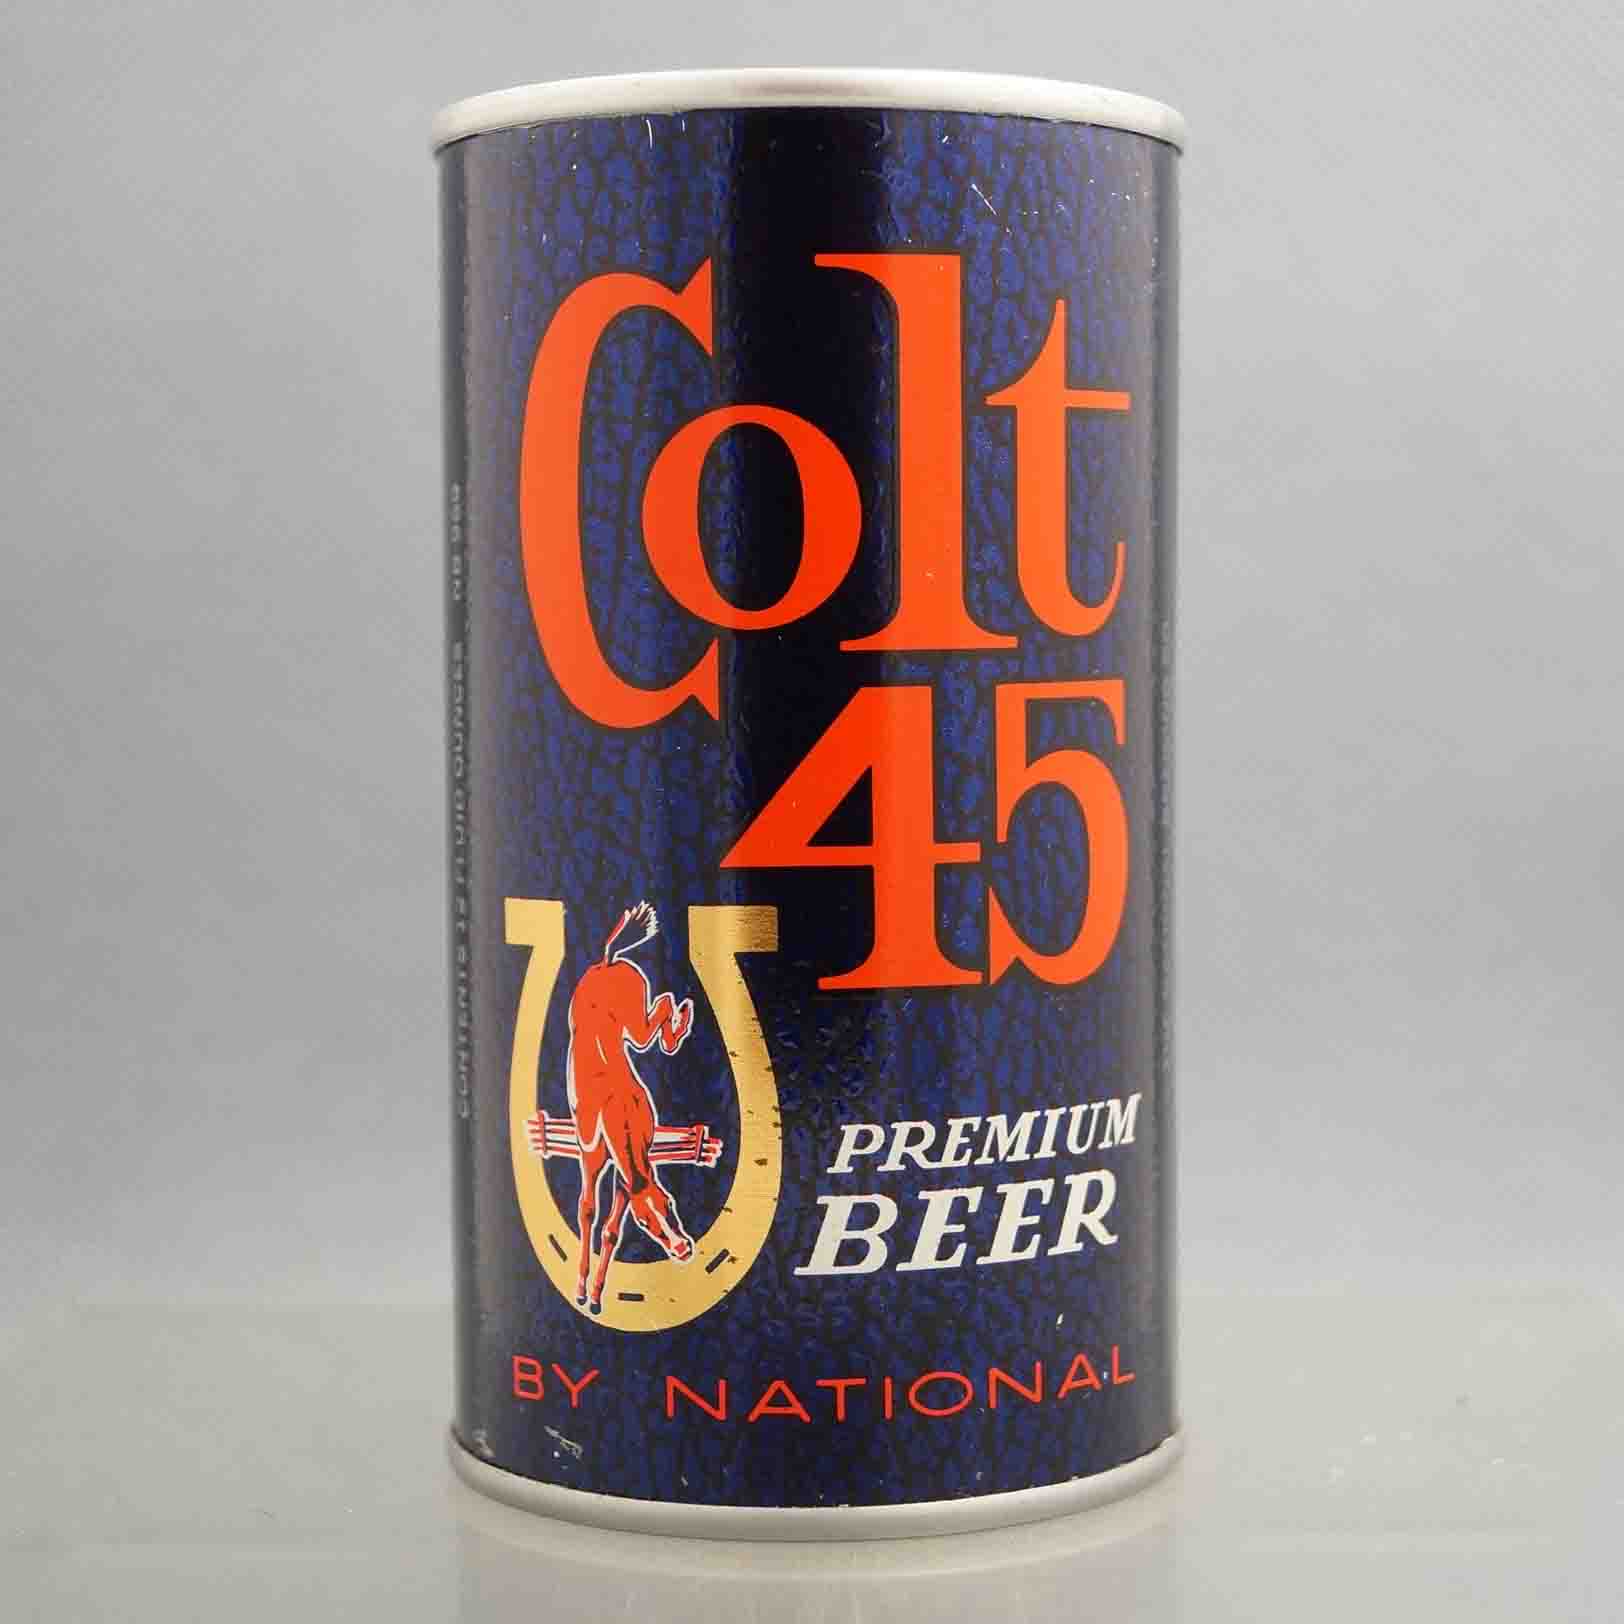 colt-45-premium-229-33-beer-can-1.jpg